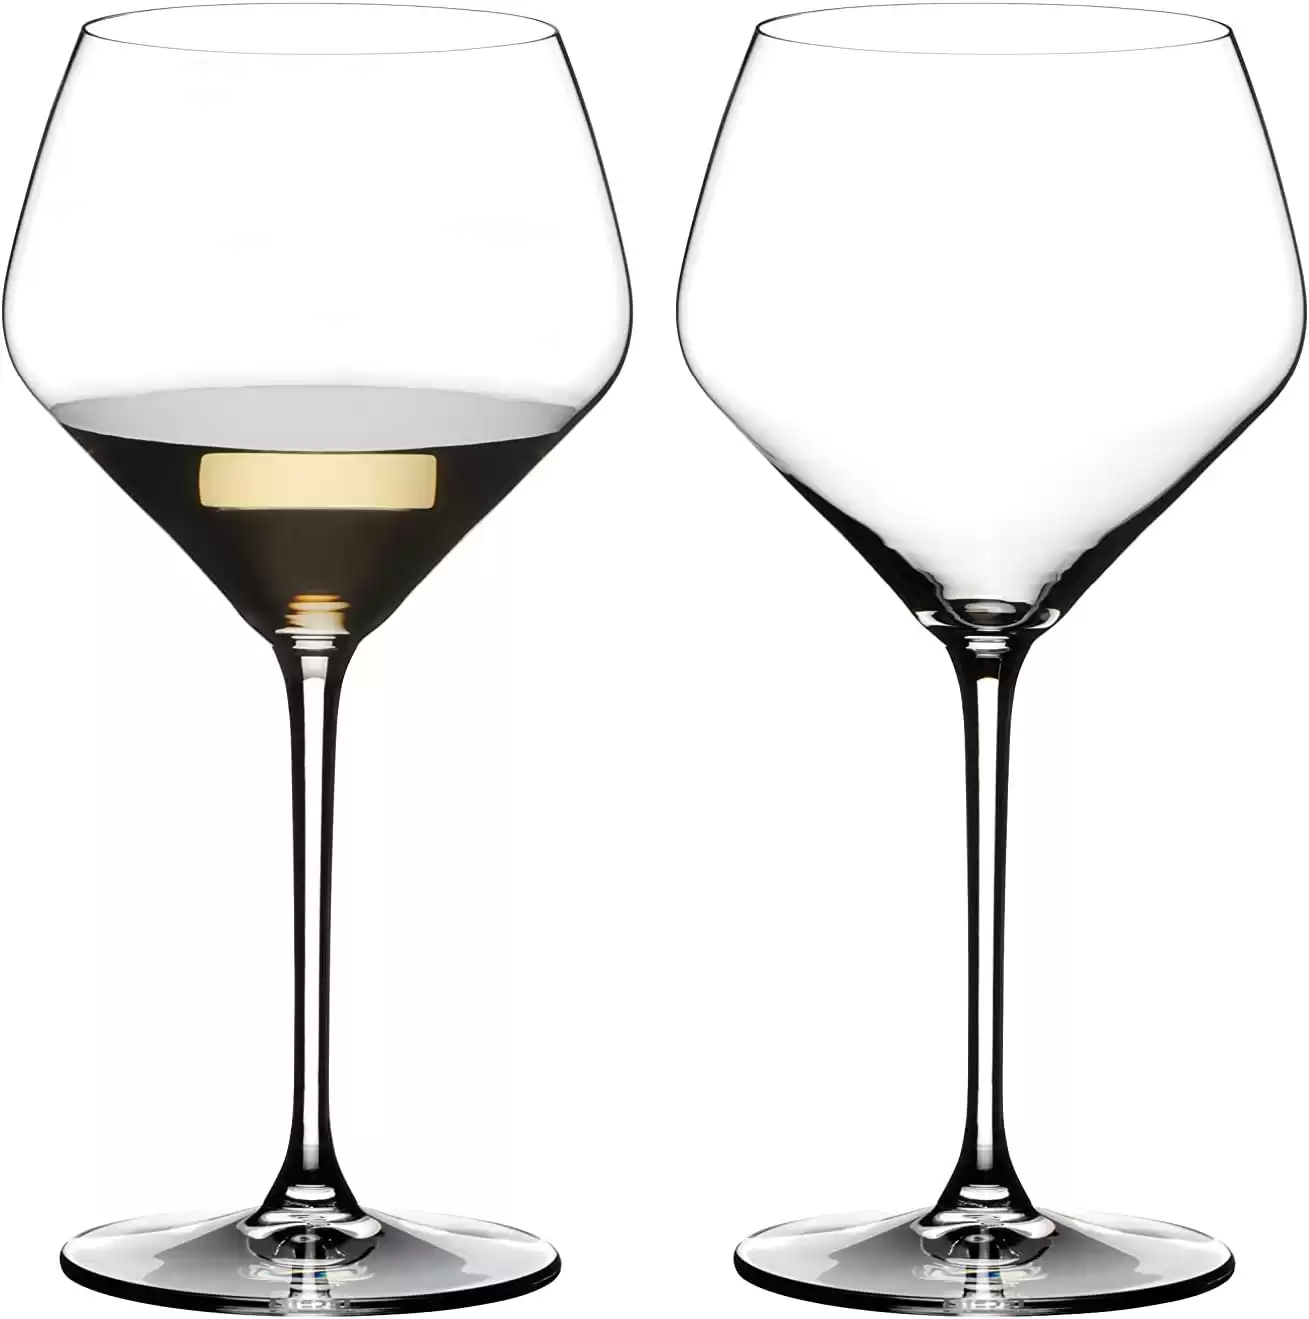 10 Oz. Rioja White Wine Glasses With Colored Stem Bottom